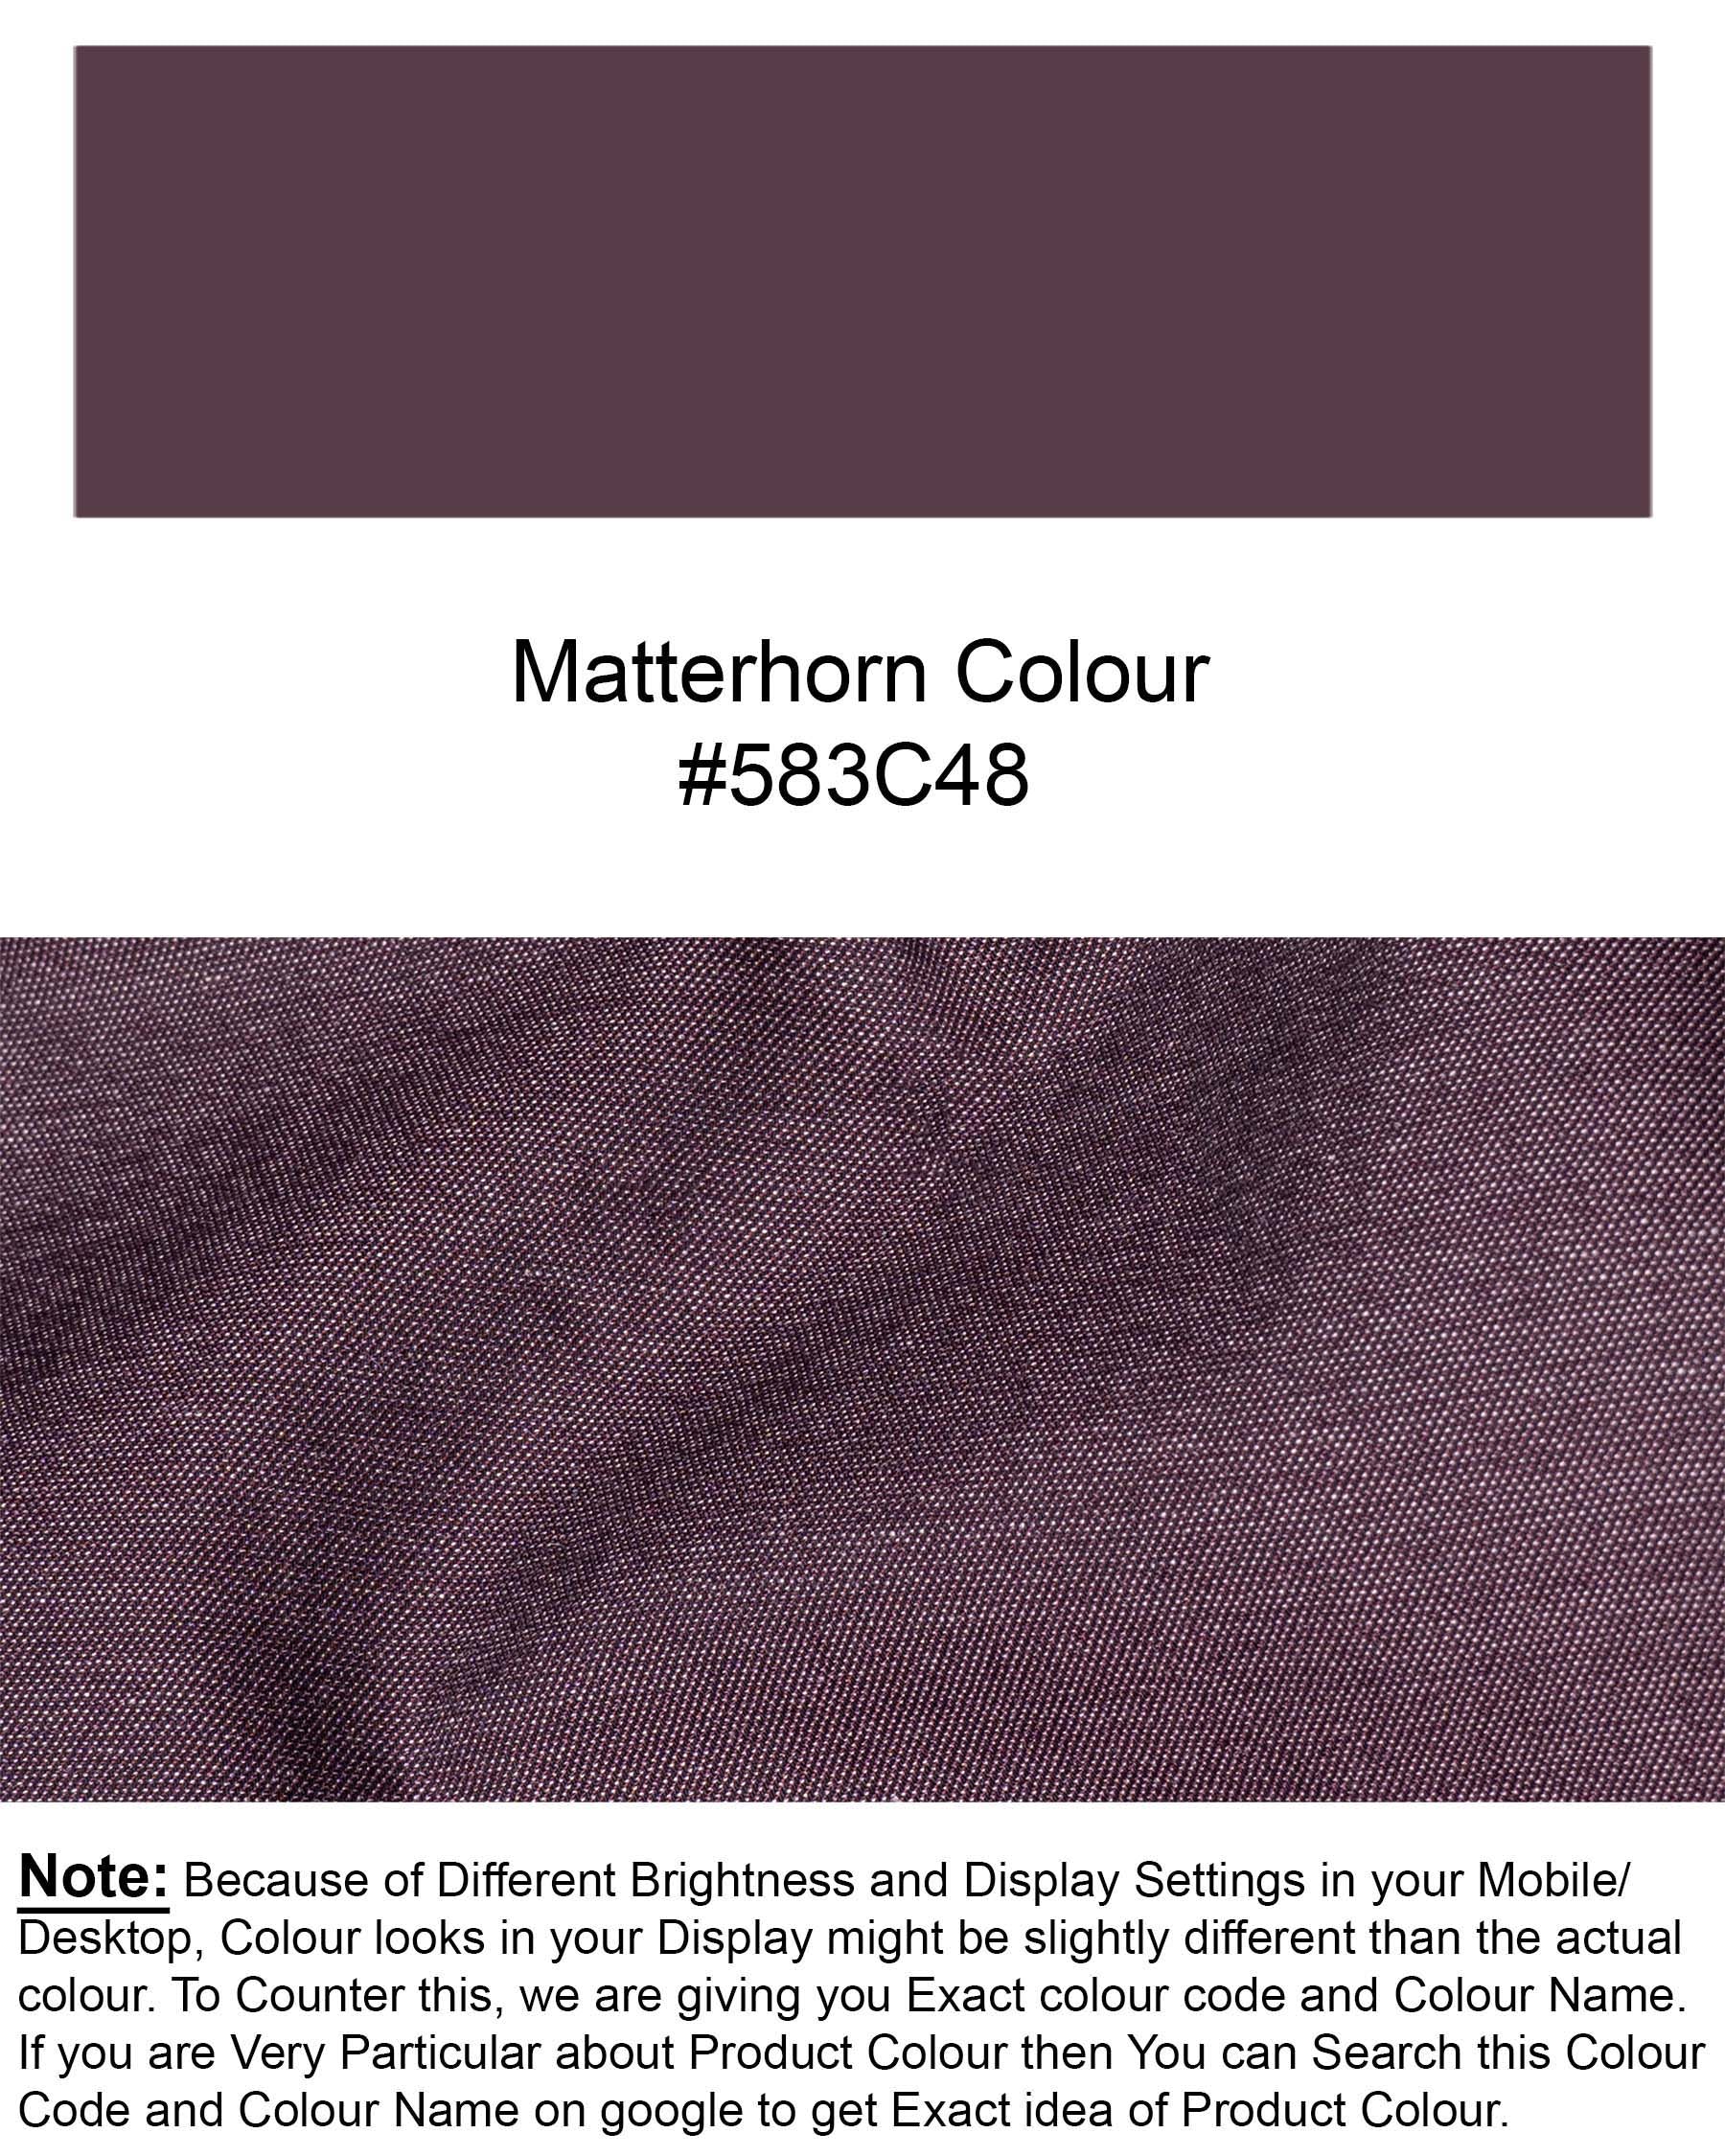 Matterhorn Premium Chambray Shirt 6647-CA-38,6647-CA-H-38,6647-CA-39,6647-CA-H-39,6647-CA-40,6647-CA-H-40,6647-CA-42,6647-CA-H-42,6647-CA-44,6647-CA-H-44,6647-CA-46,6647-CA-H-46,6647-CA-48,6647-CA-H-48,6647-CA-50,6647-CA-H-50,6647-CA-52,6647-CA-H-52